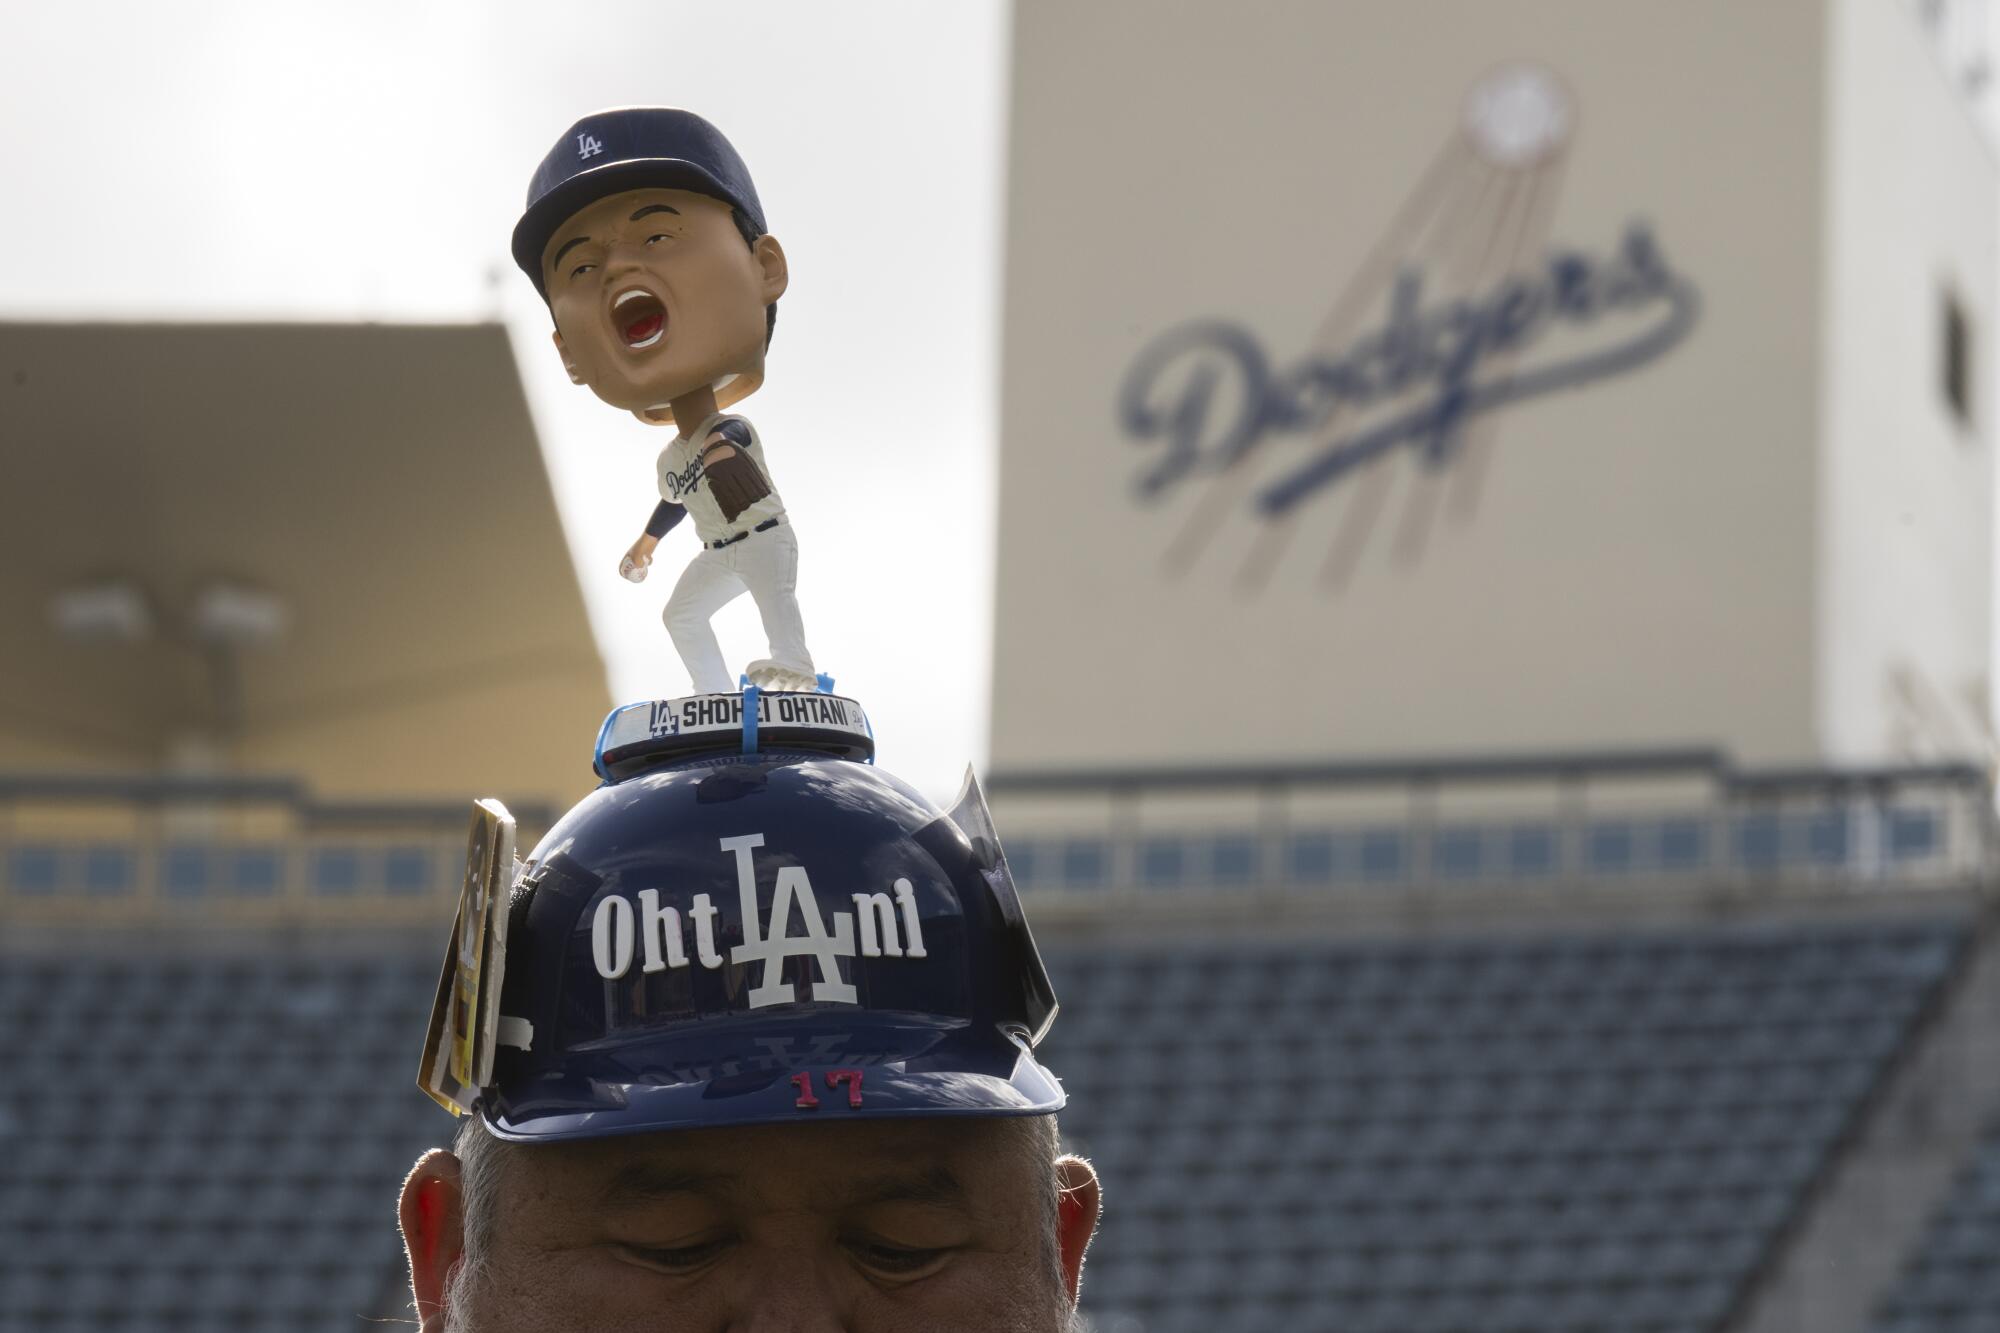 Dodgers fan Alberto Valenzuela attends DodgerFest at Dodger Stadium wearing a batting helmet with a Shohei Ohtani bobblehead.